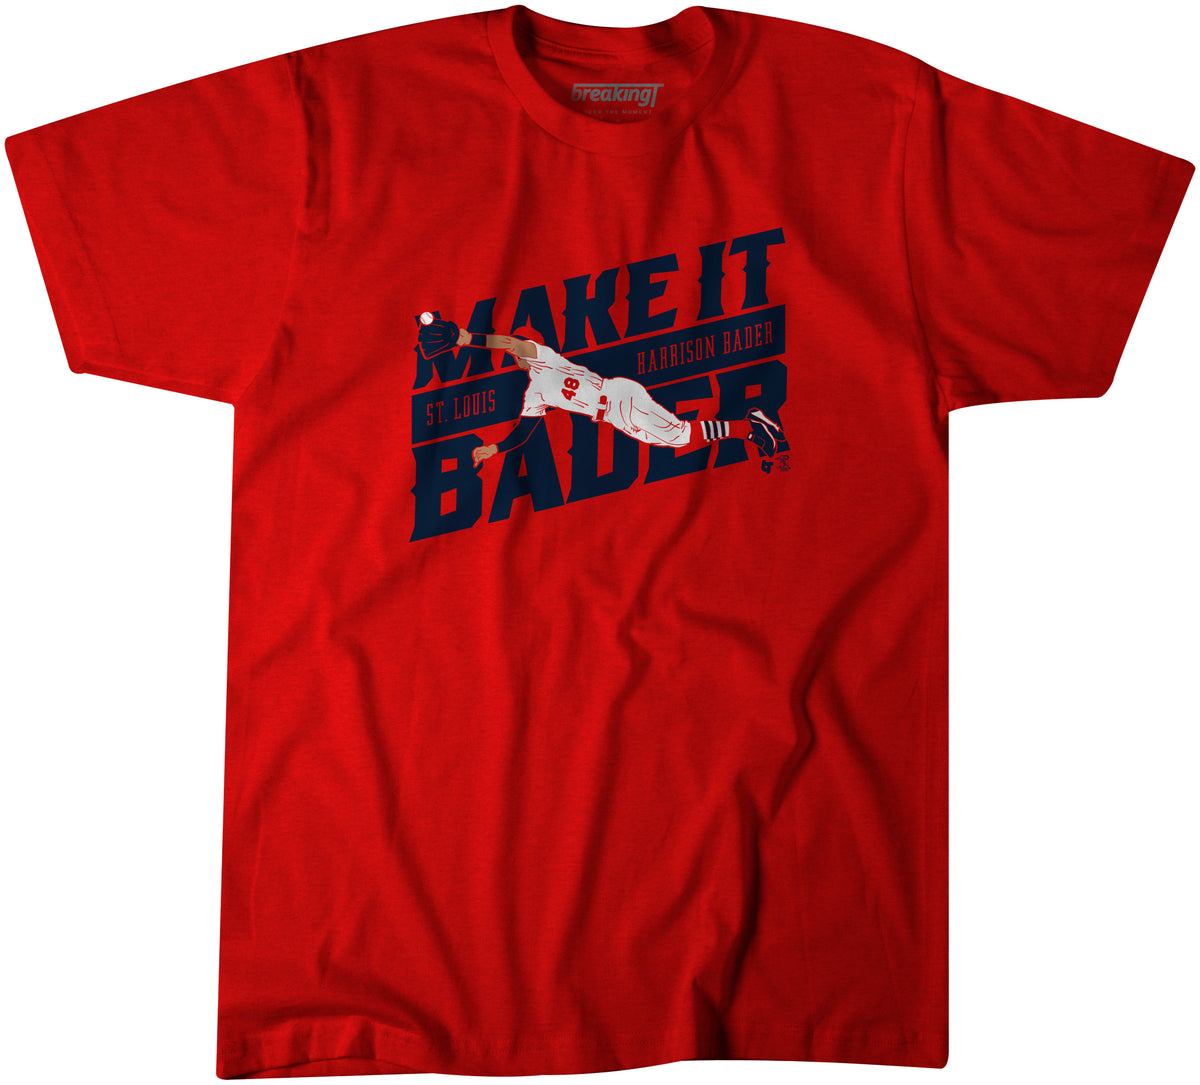 Bader Tots Shirt, St. Louis - Licensed by Harrison Bader - BreakingT